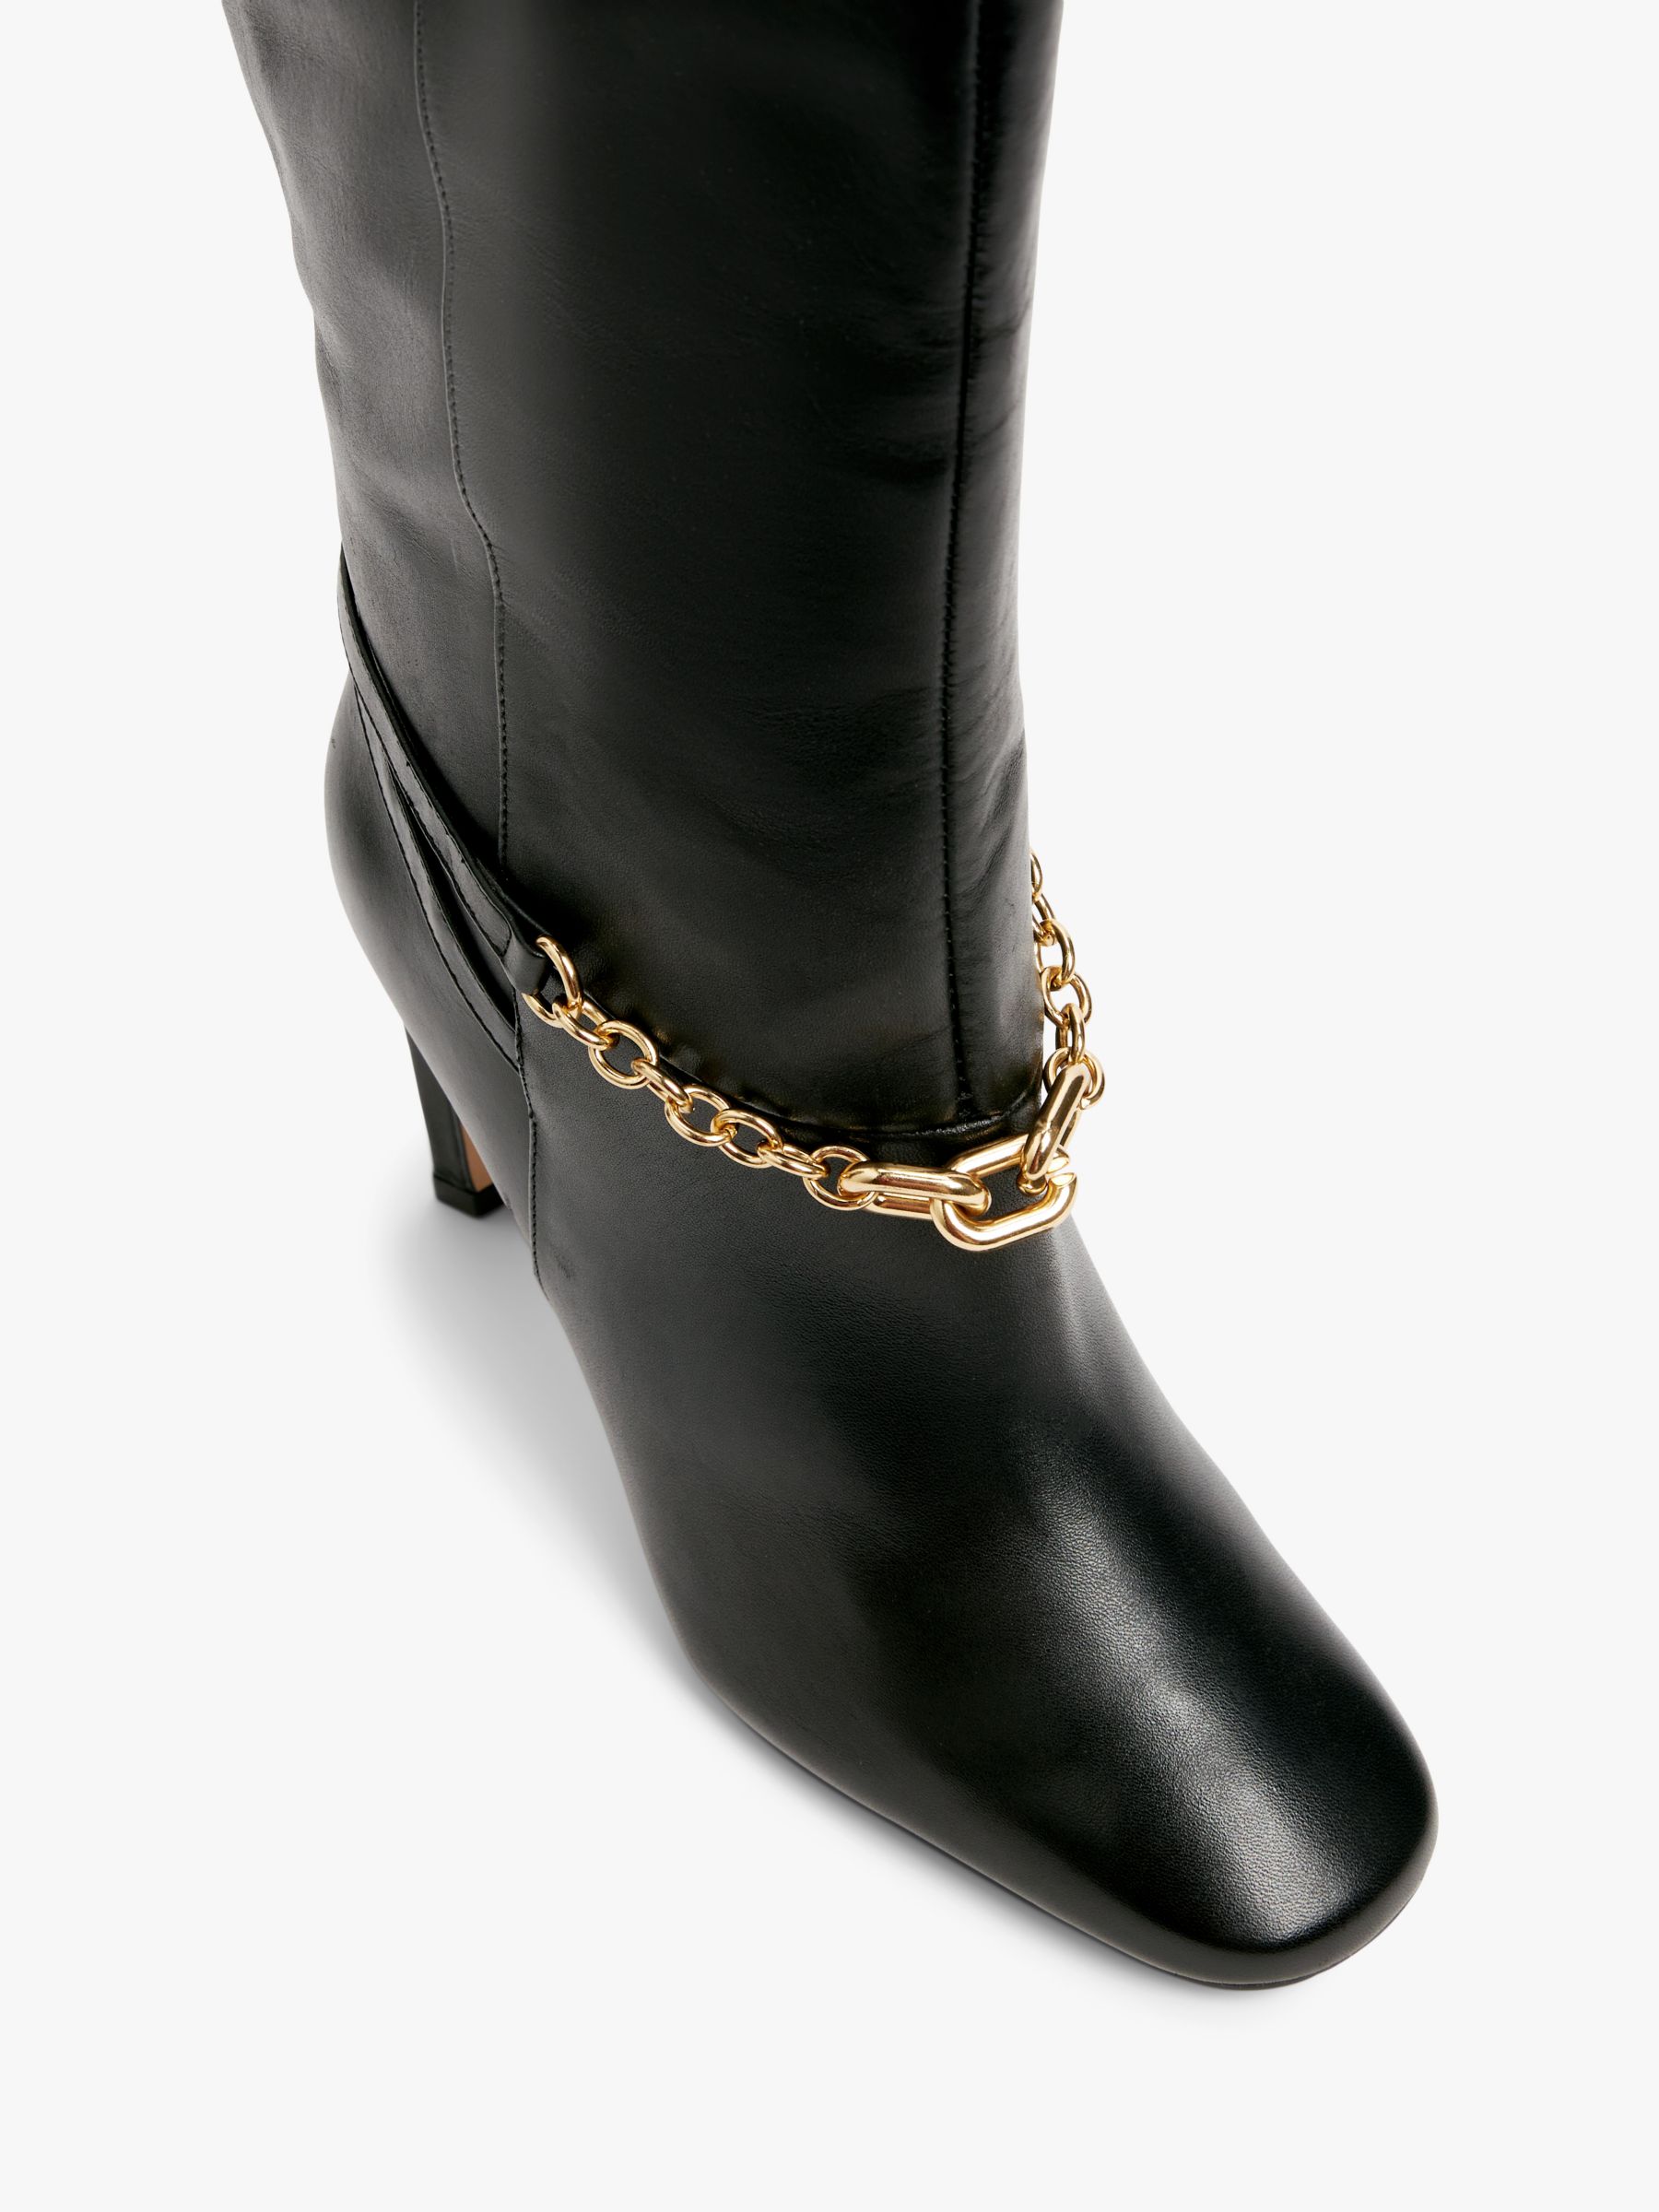 John Lewis Sapphire Chain Detail High Heel Long Boots, Black, 6